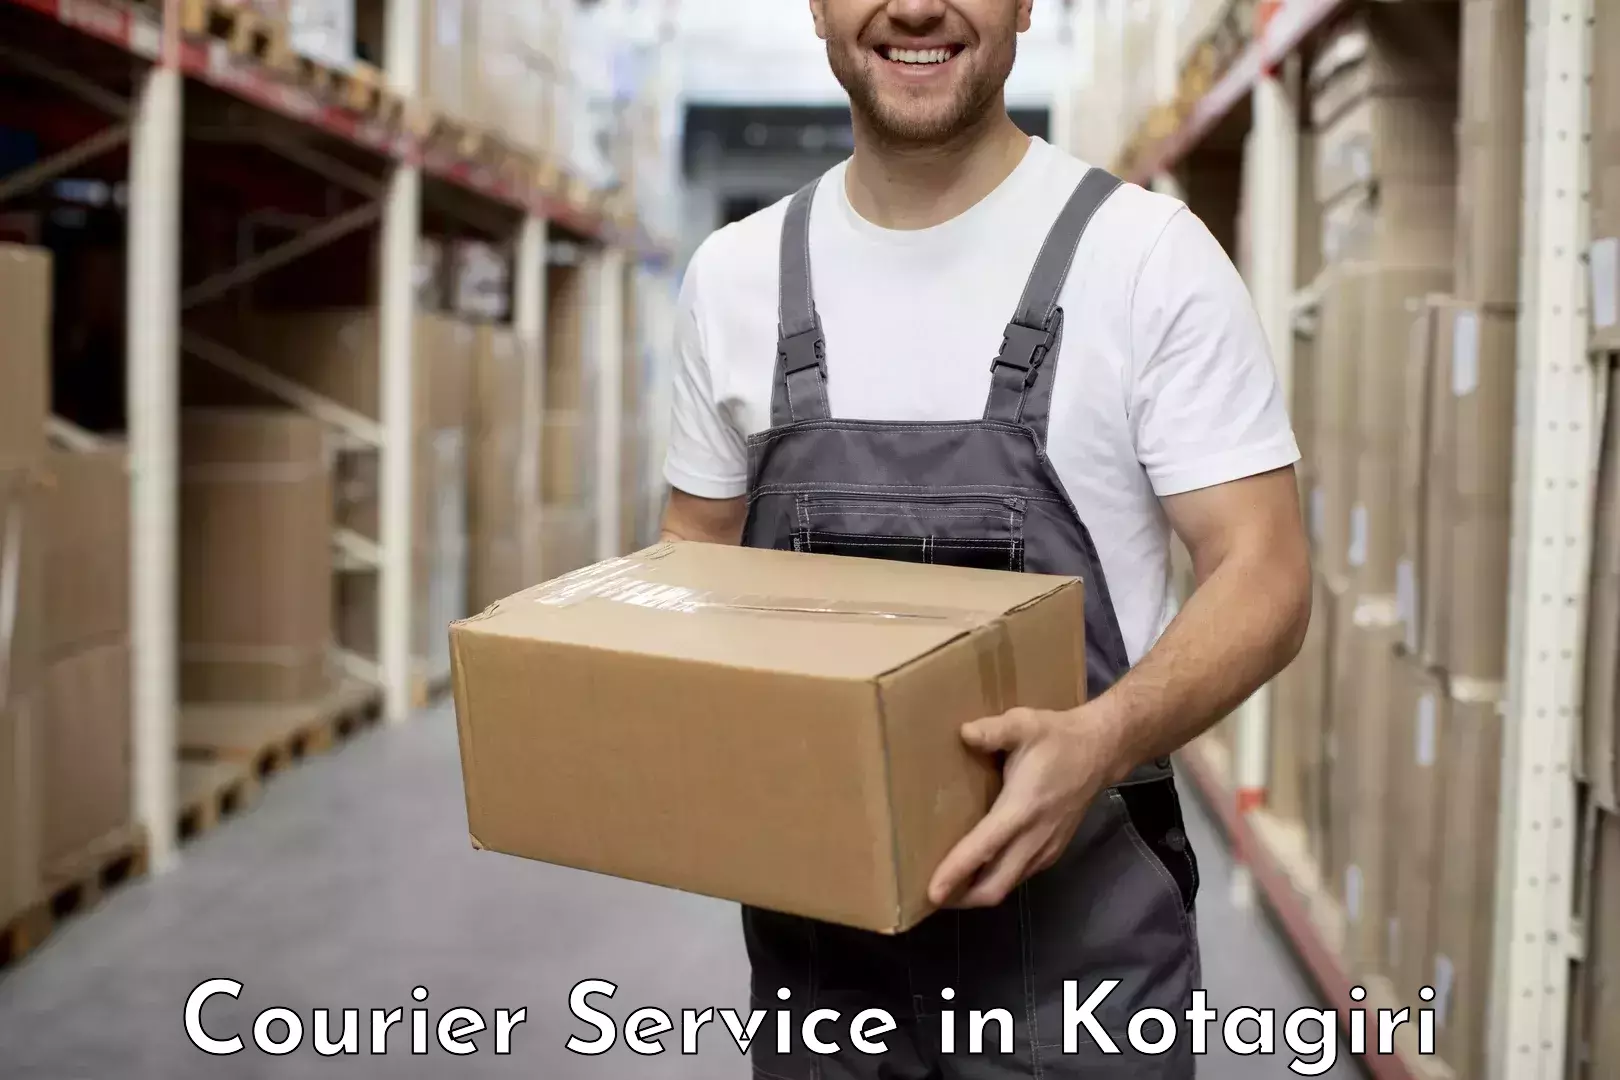 Innovative logistics solutions in Kotagiri